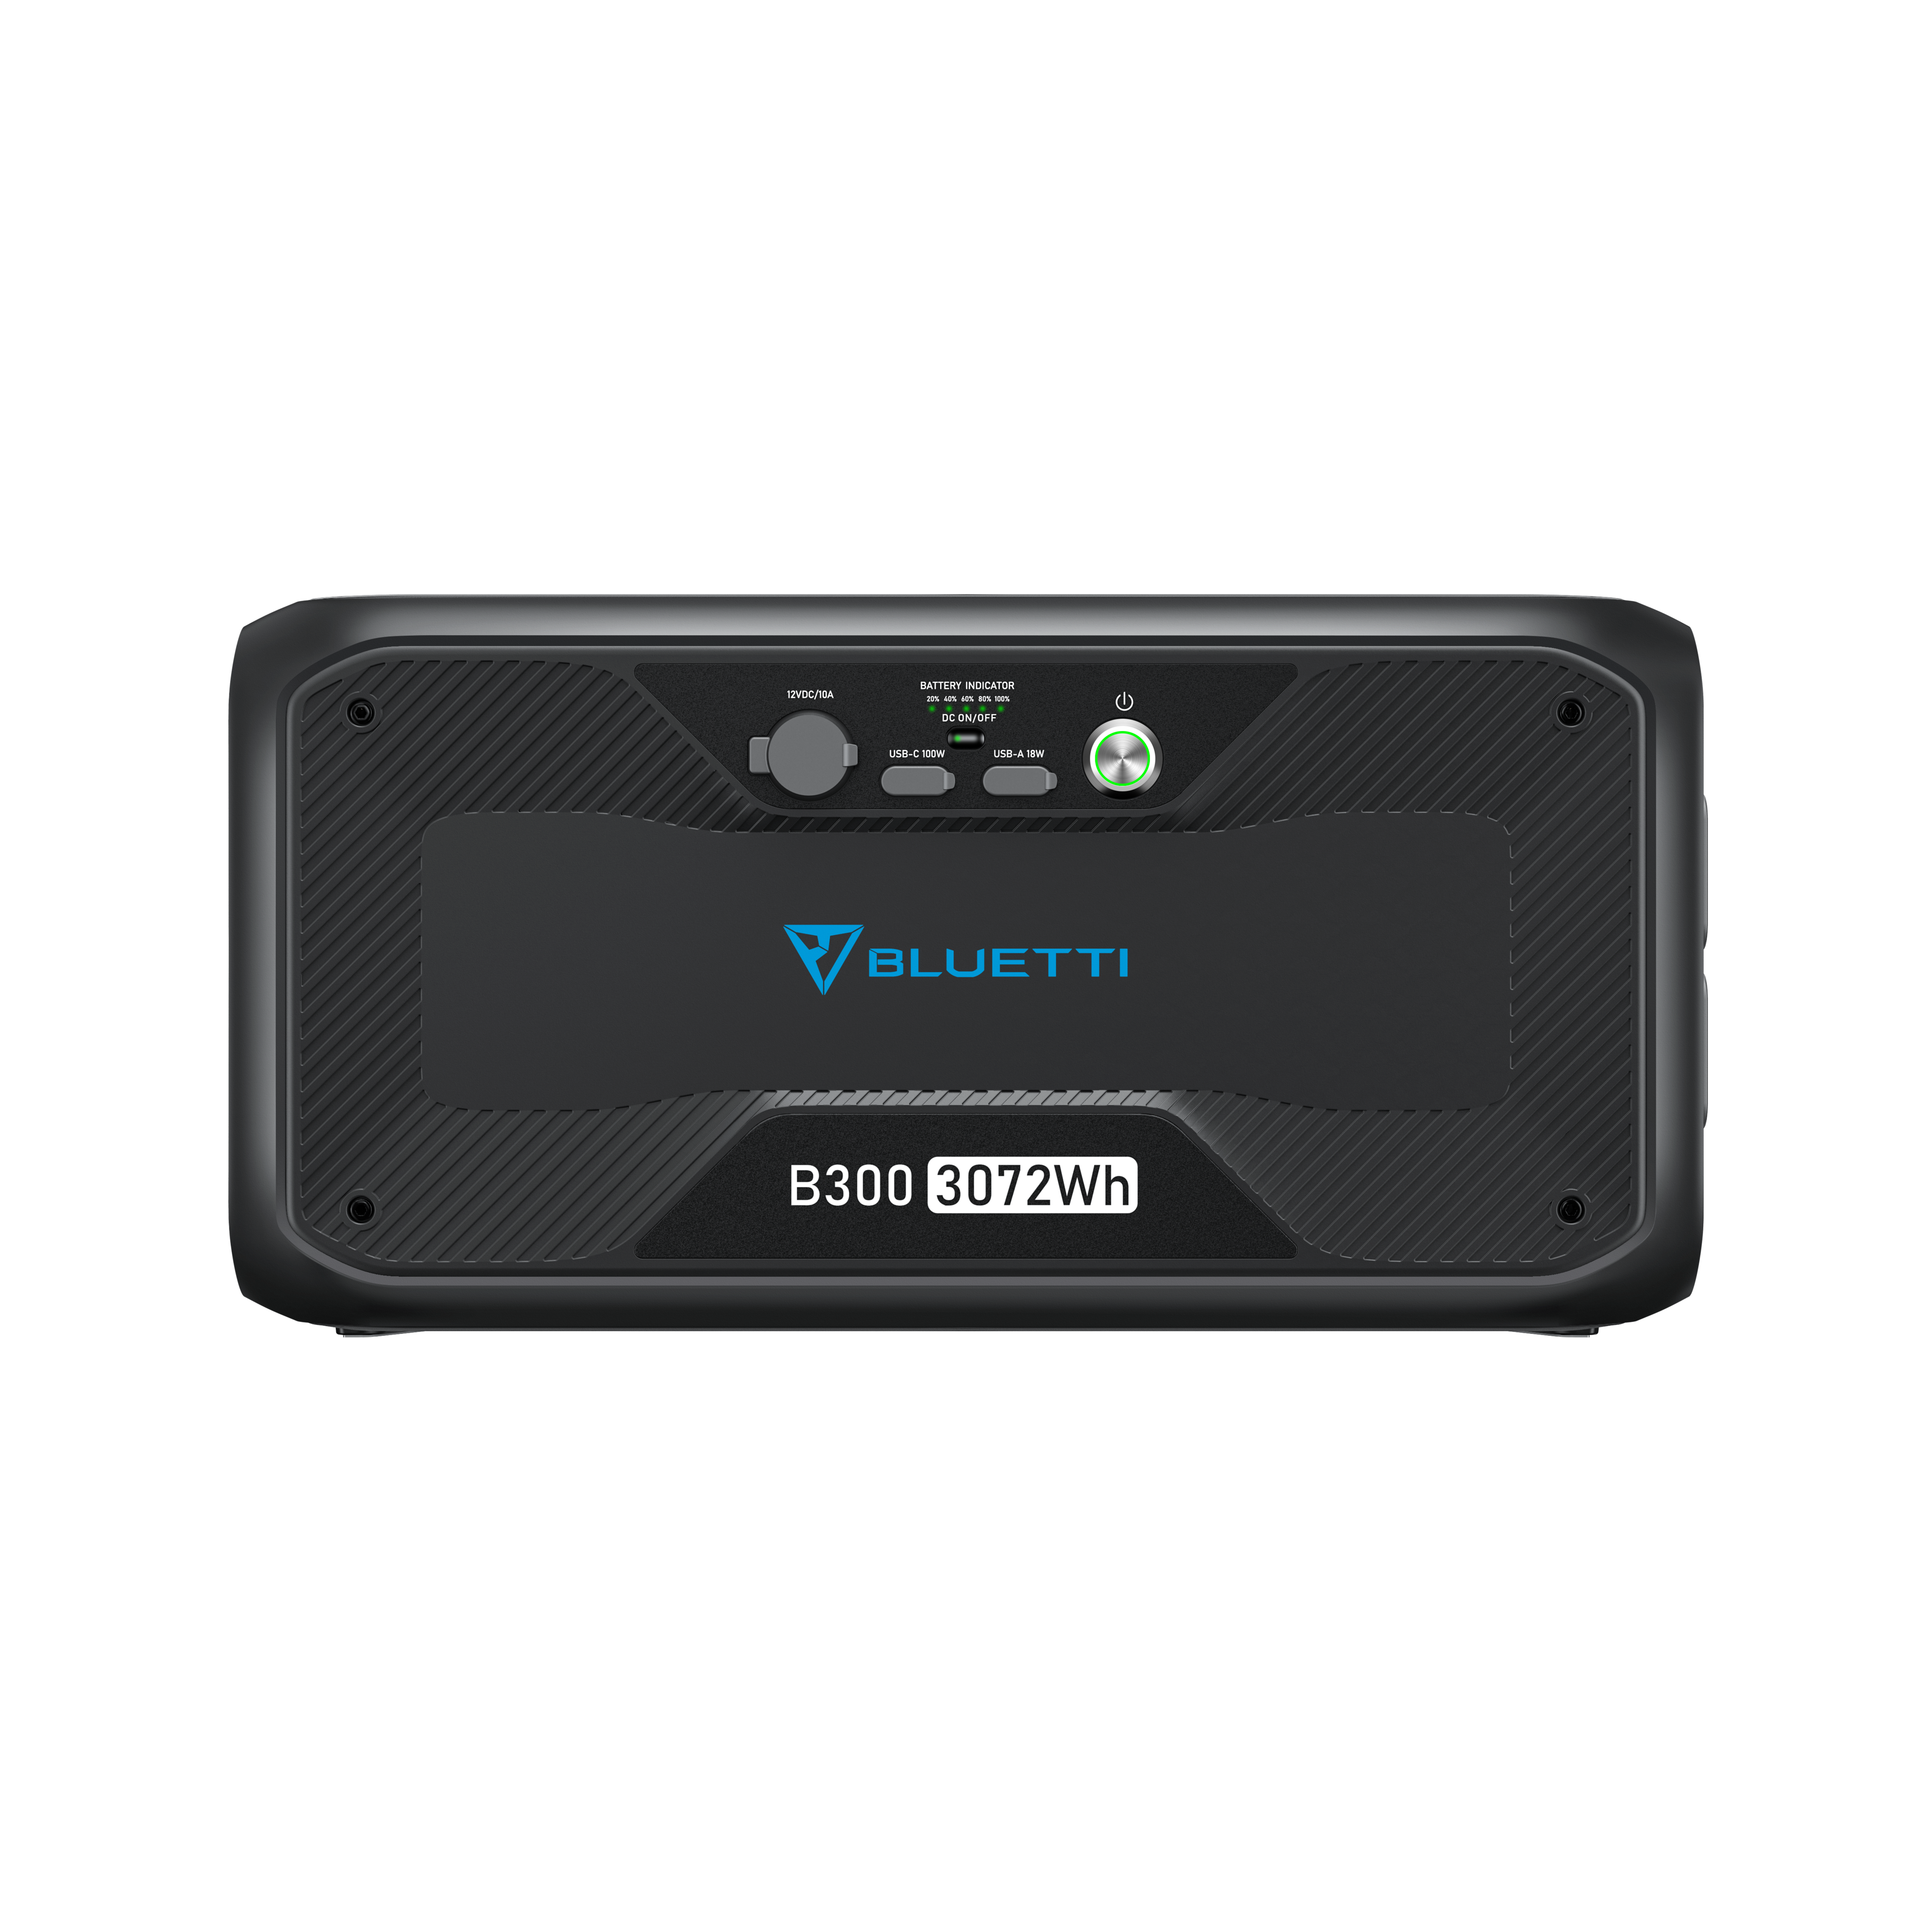 Bluetti B300 3072Wh - Kraftfuld Udvidelsesbatteri